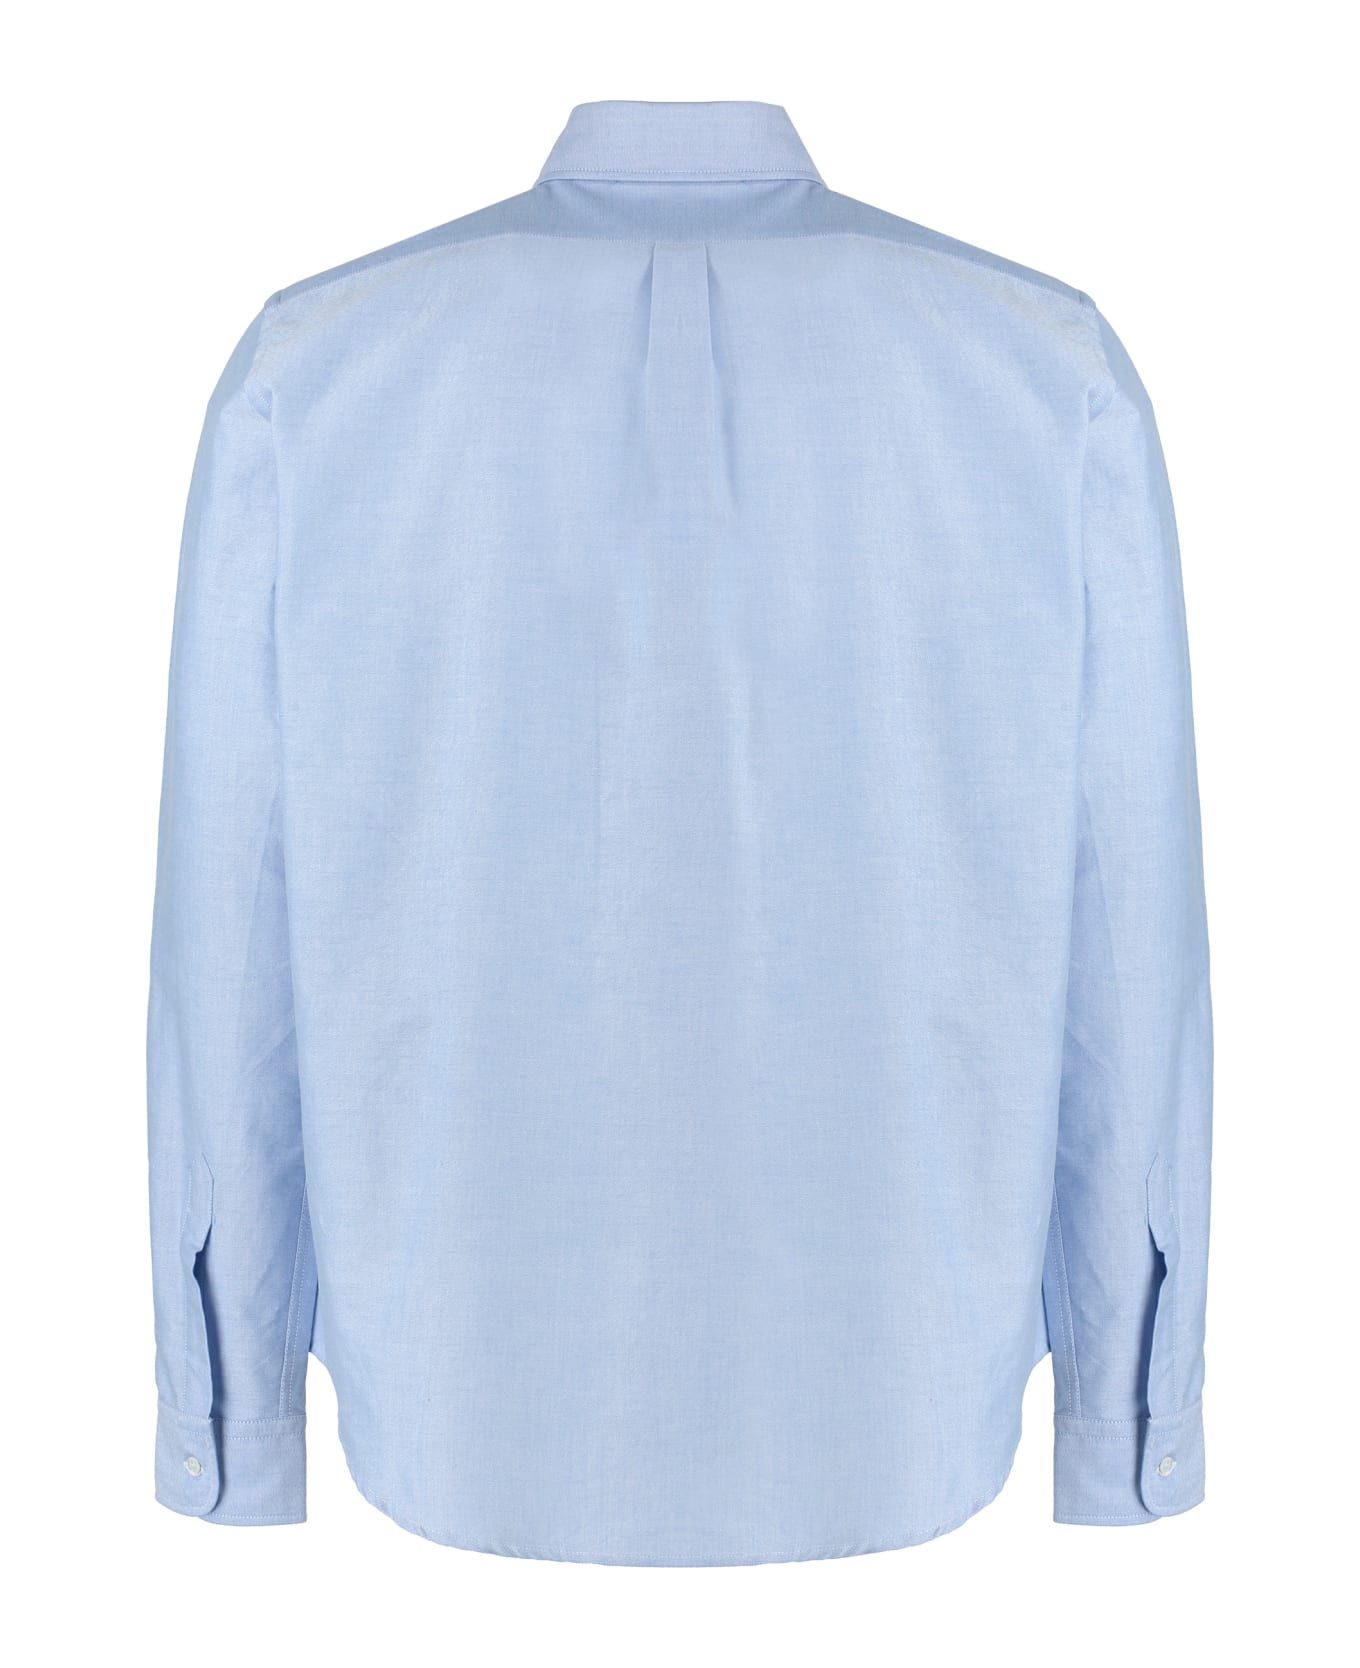 Aspesi Cotton Poplin Shirt - Light Blue